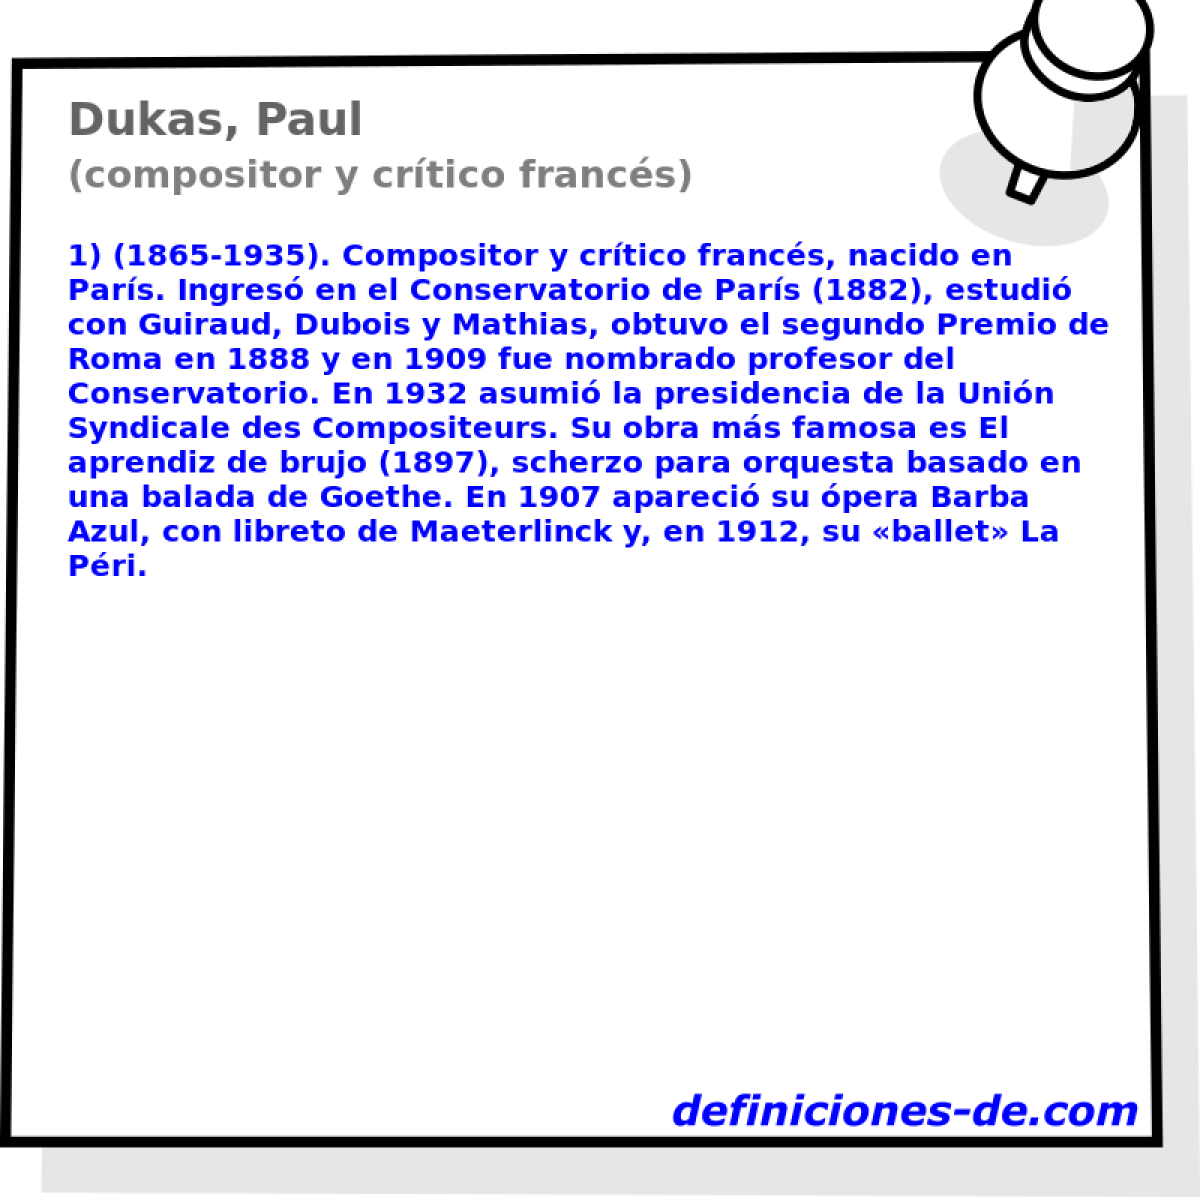 Dukas, Paul (compositor y crtico francs)